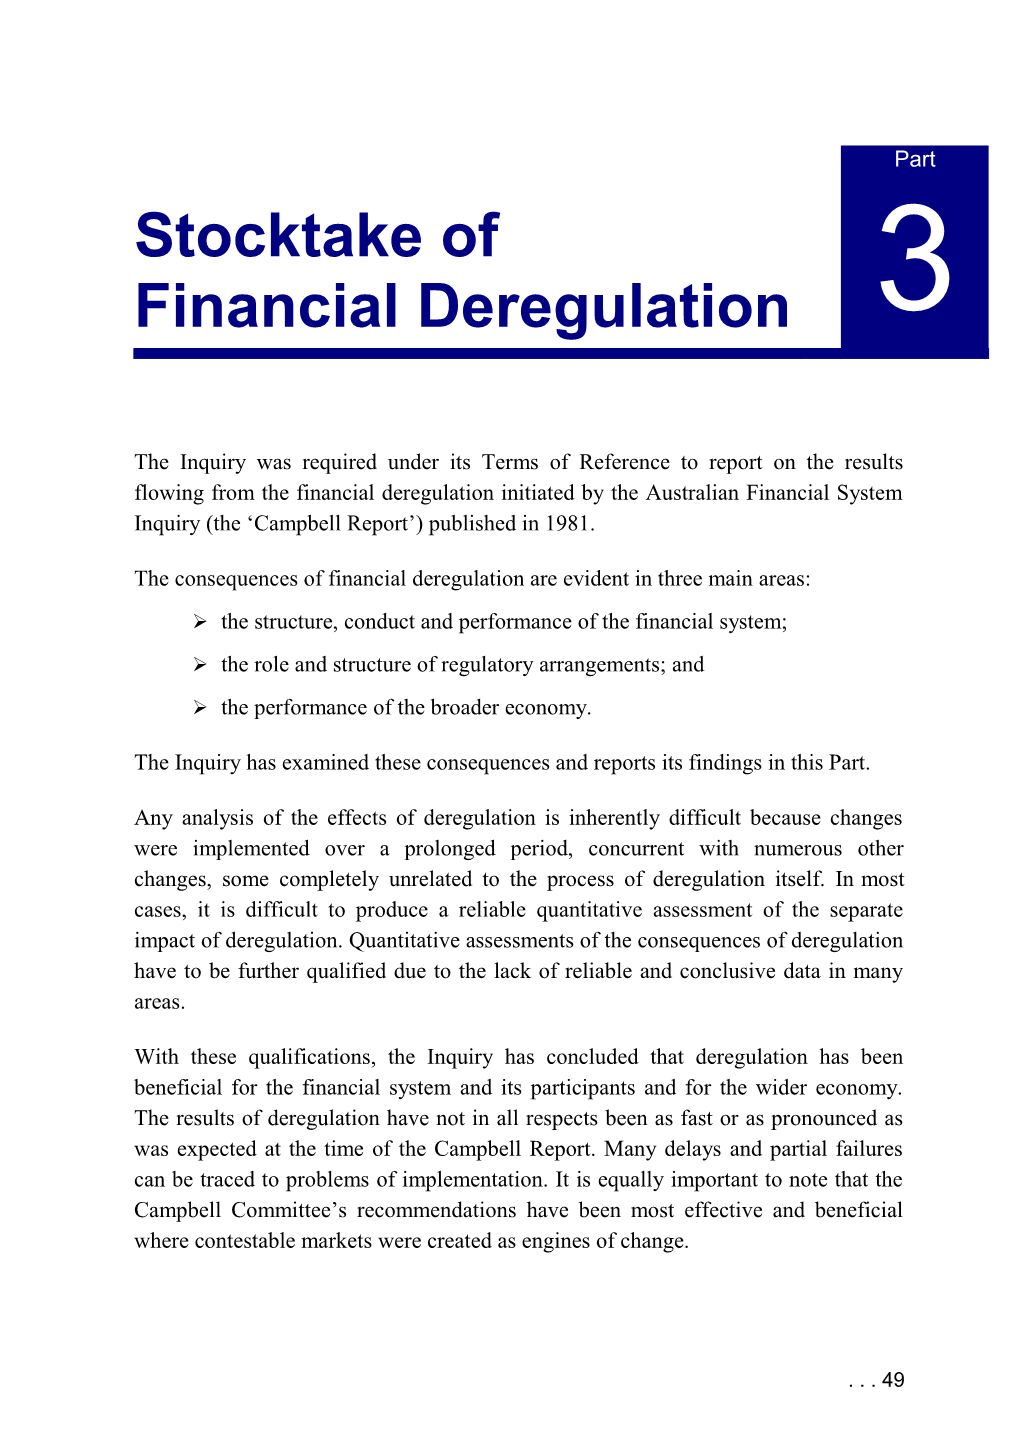 Financial System Inquiry (Wallis Report) - Stocktake of Financial Deregulation